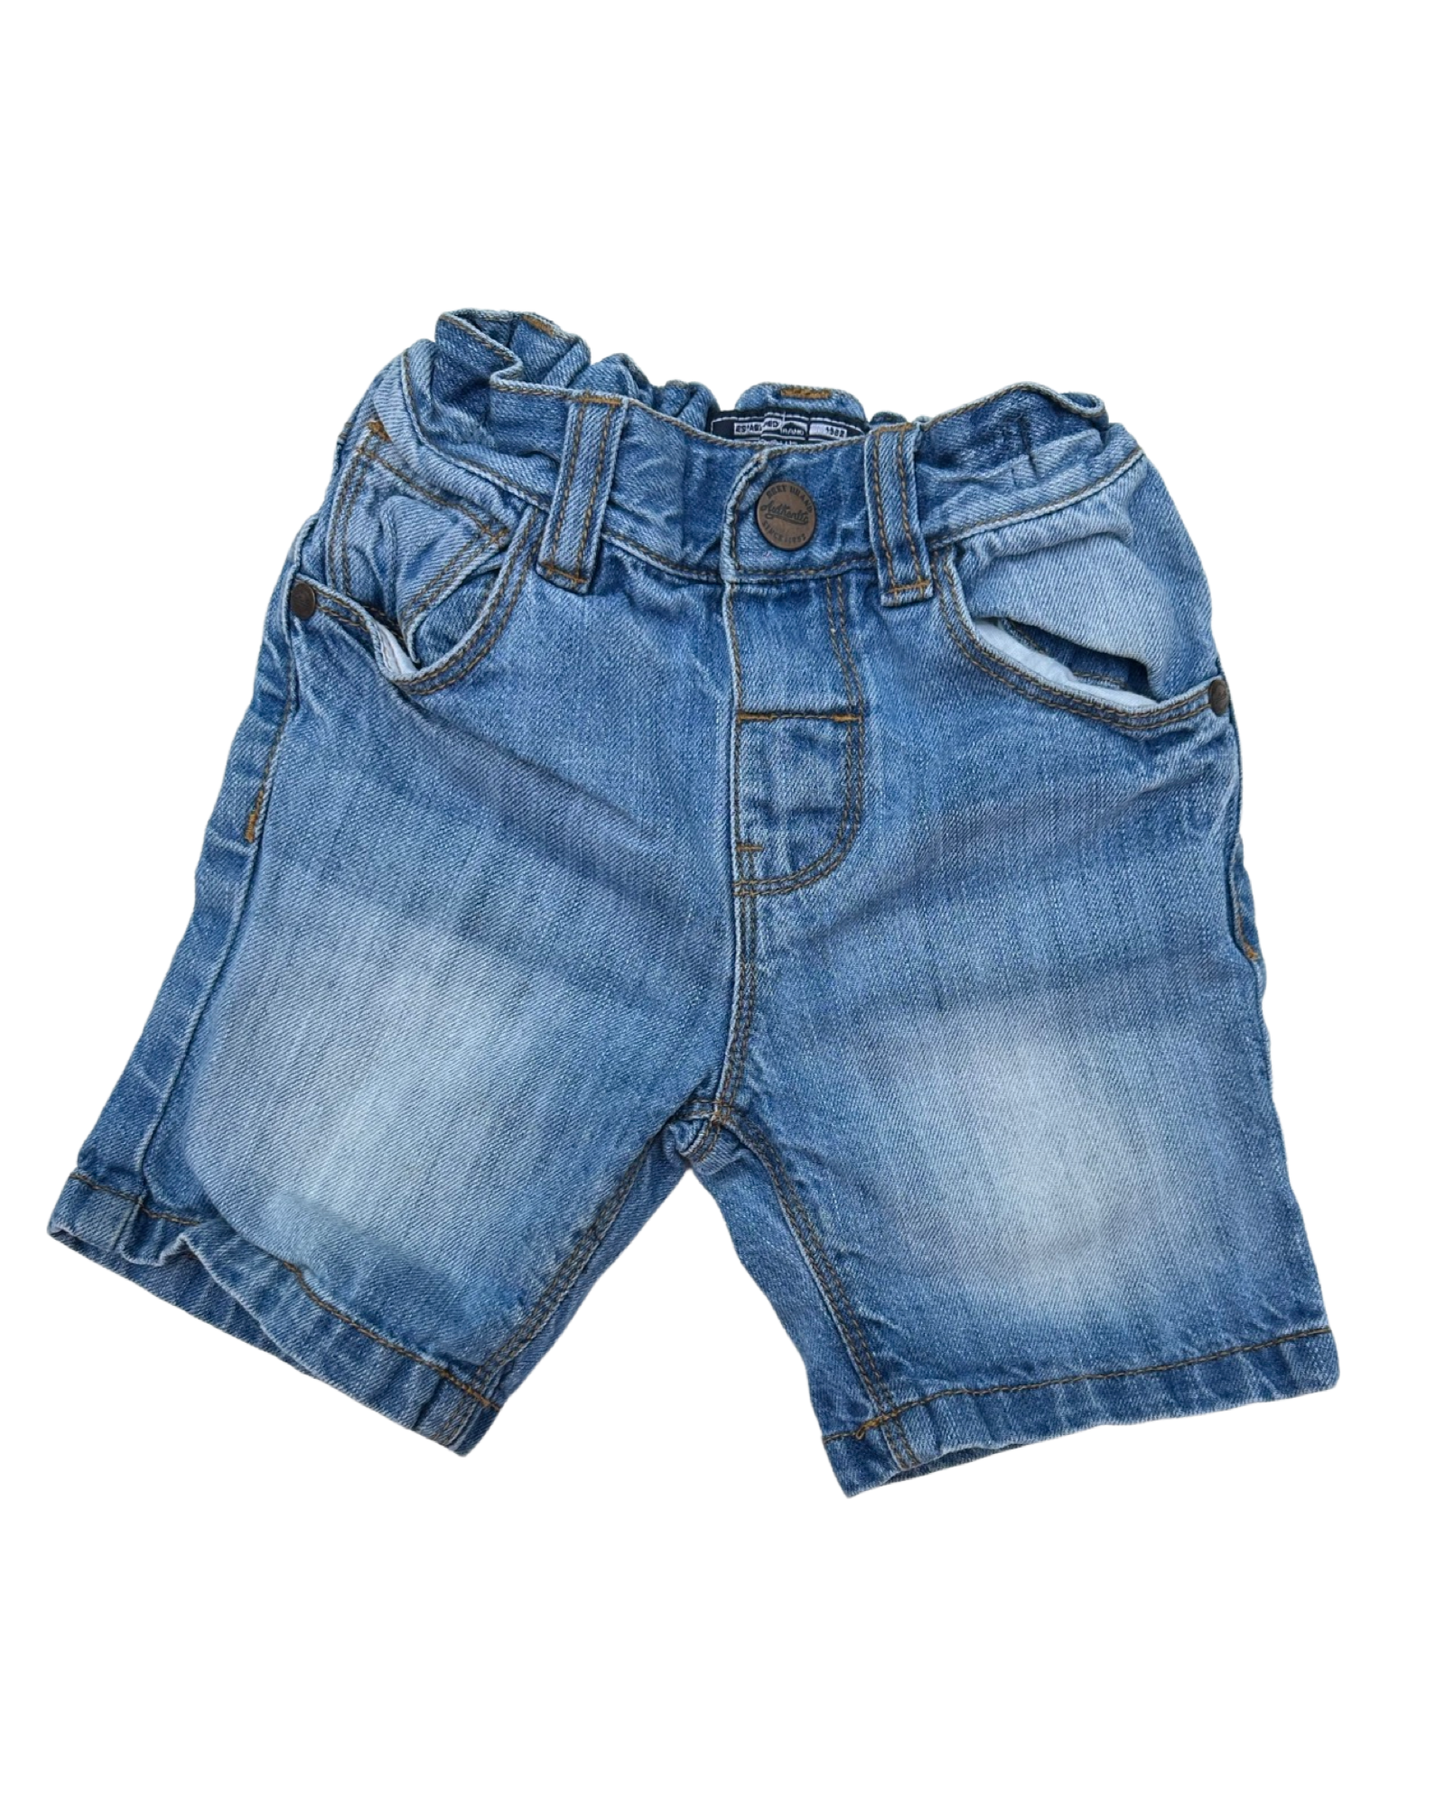 Next denim shorts (size 12-18mths)